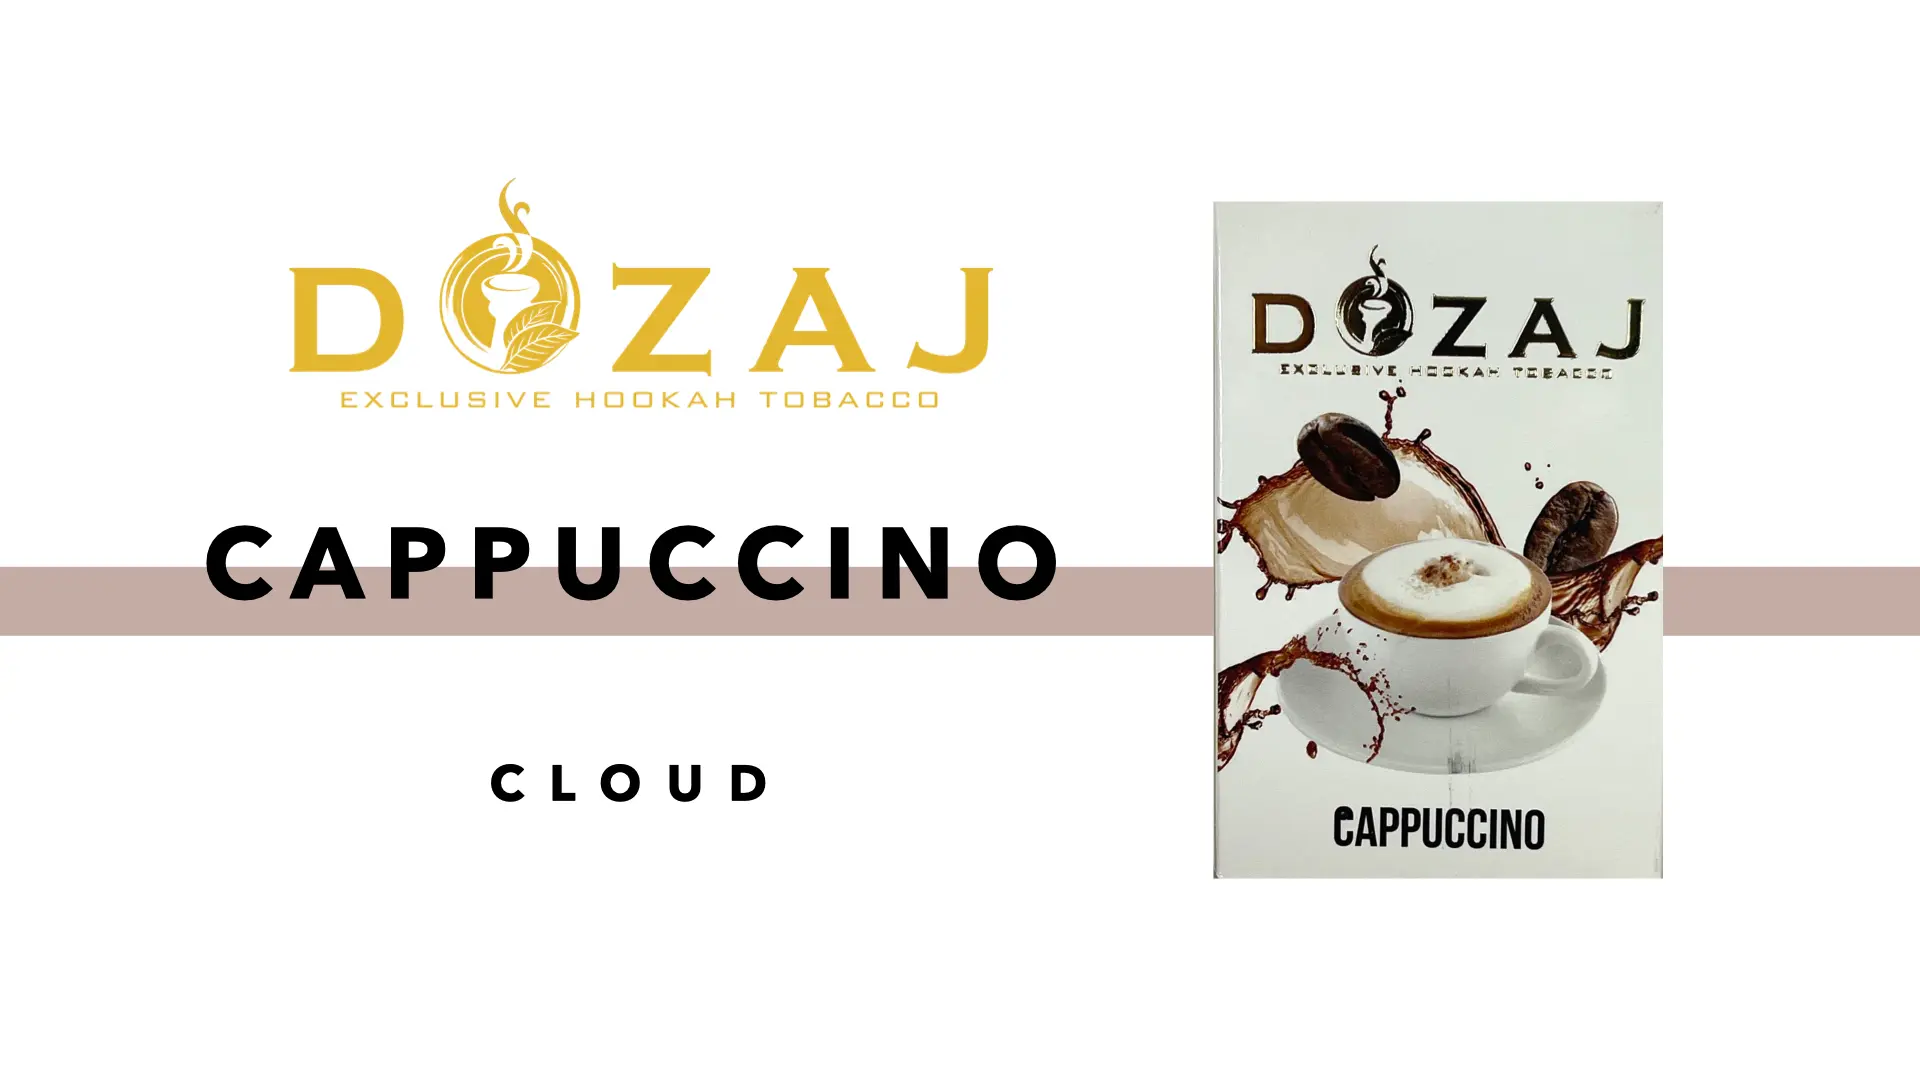 DOZAJ(ドザジ) cappuccino(カプチーノ) フレーバーレビュー